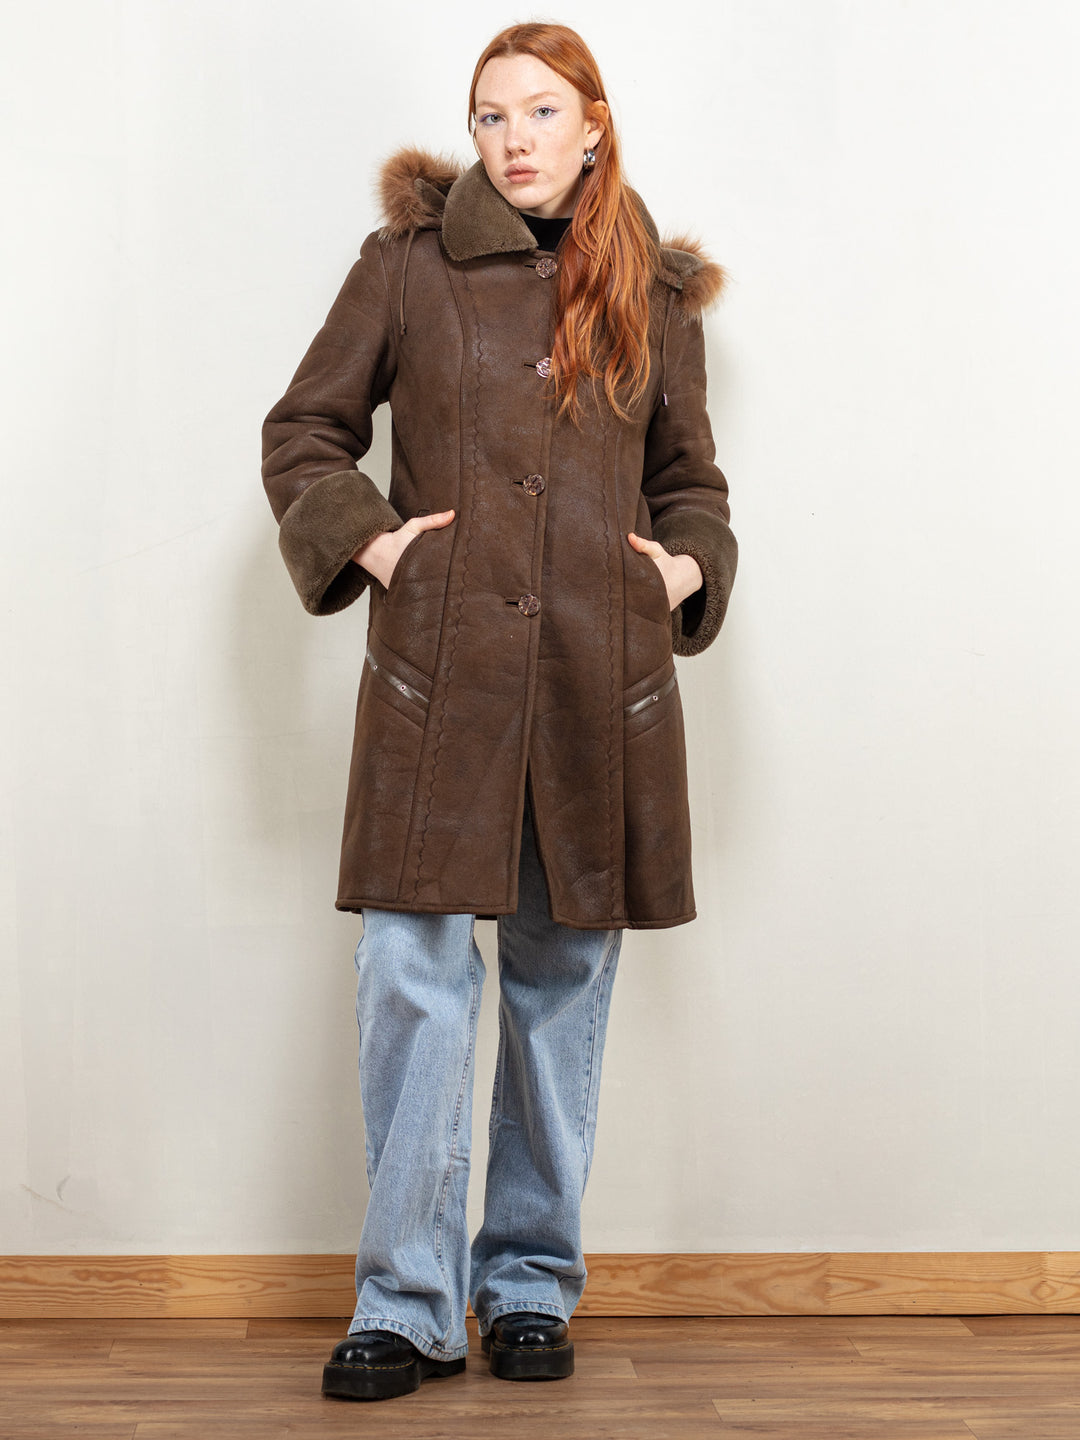 Faux Suede Coat vintage 90's women button up hooded coat boho hippie overcoat y2k style faux sheepskin leather coat western size small